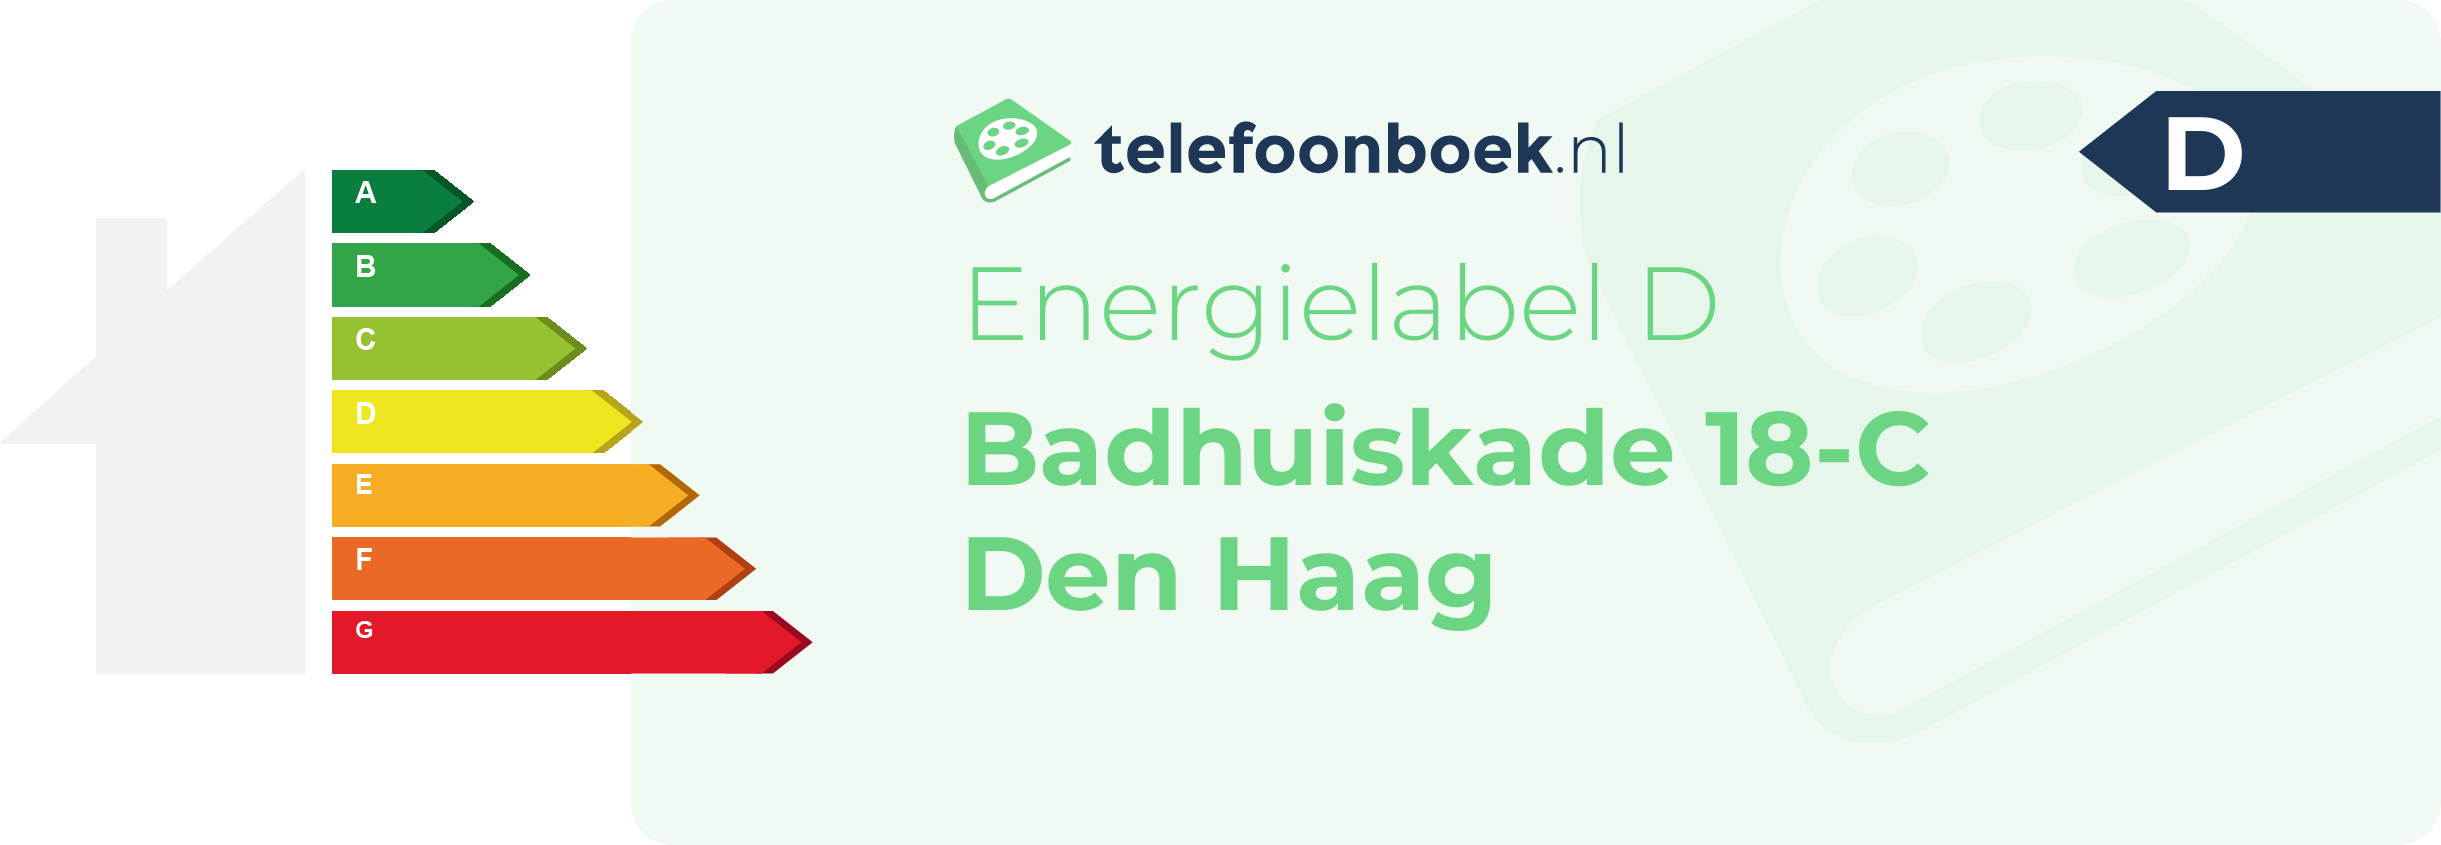 Energielabel Badhuiskade 18-C Den Haag